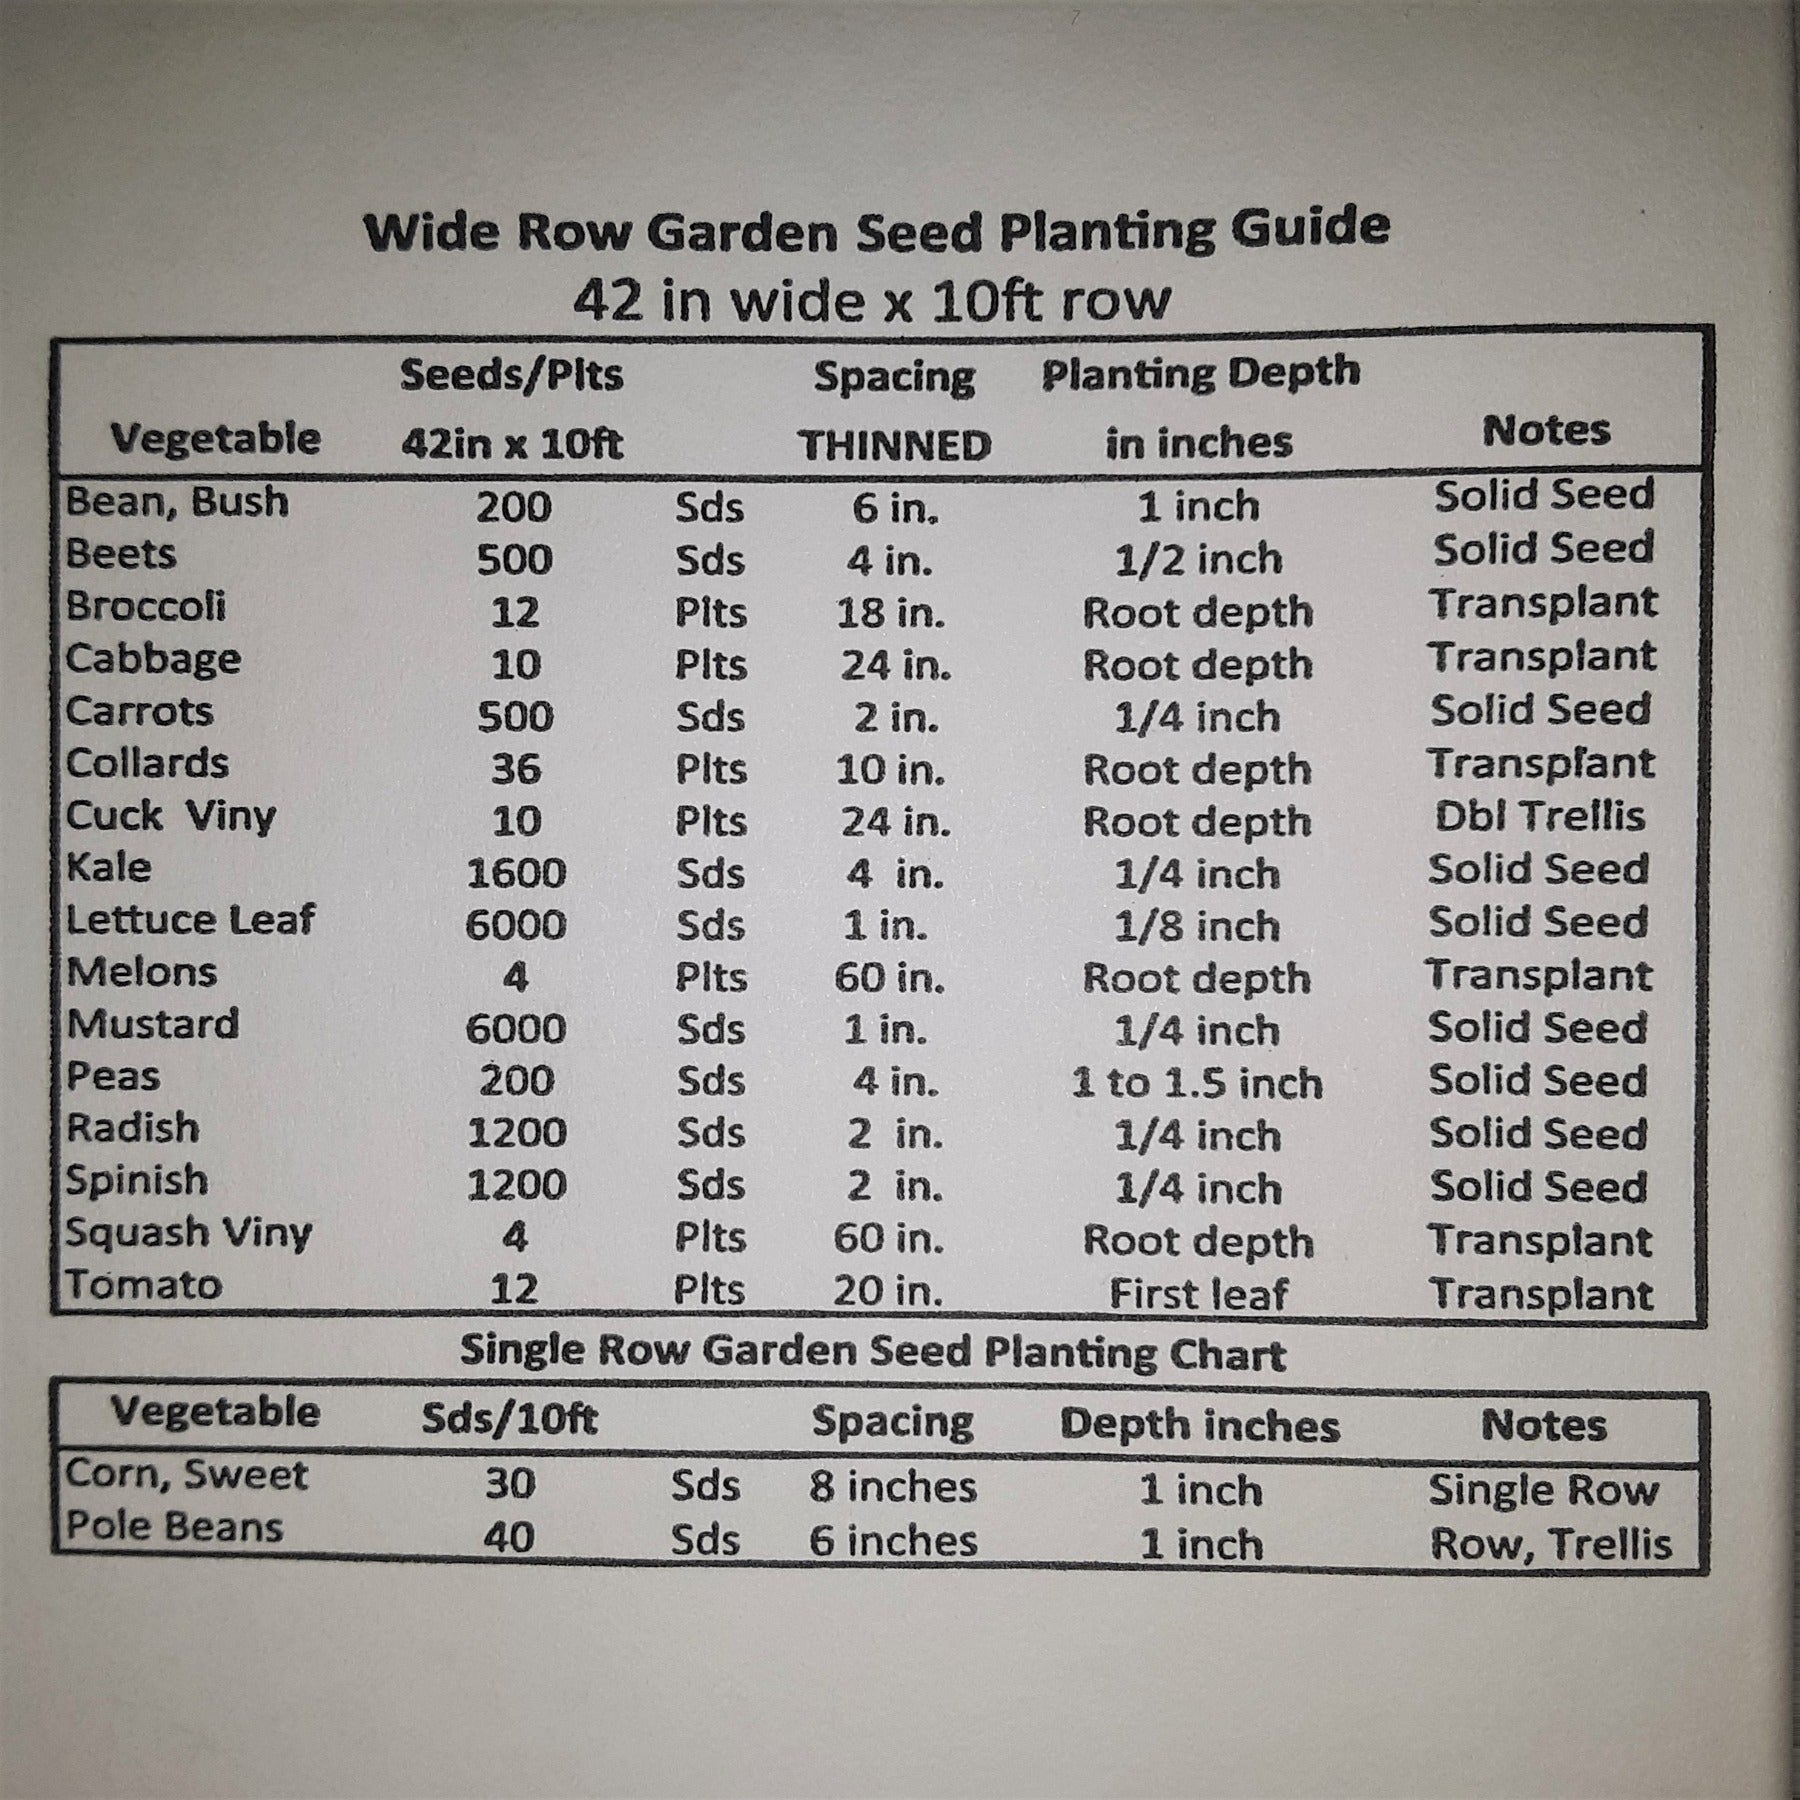 Wando Bush Pea Seeds